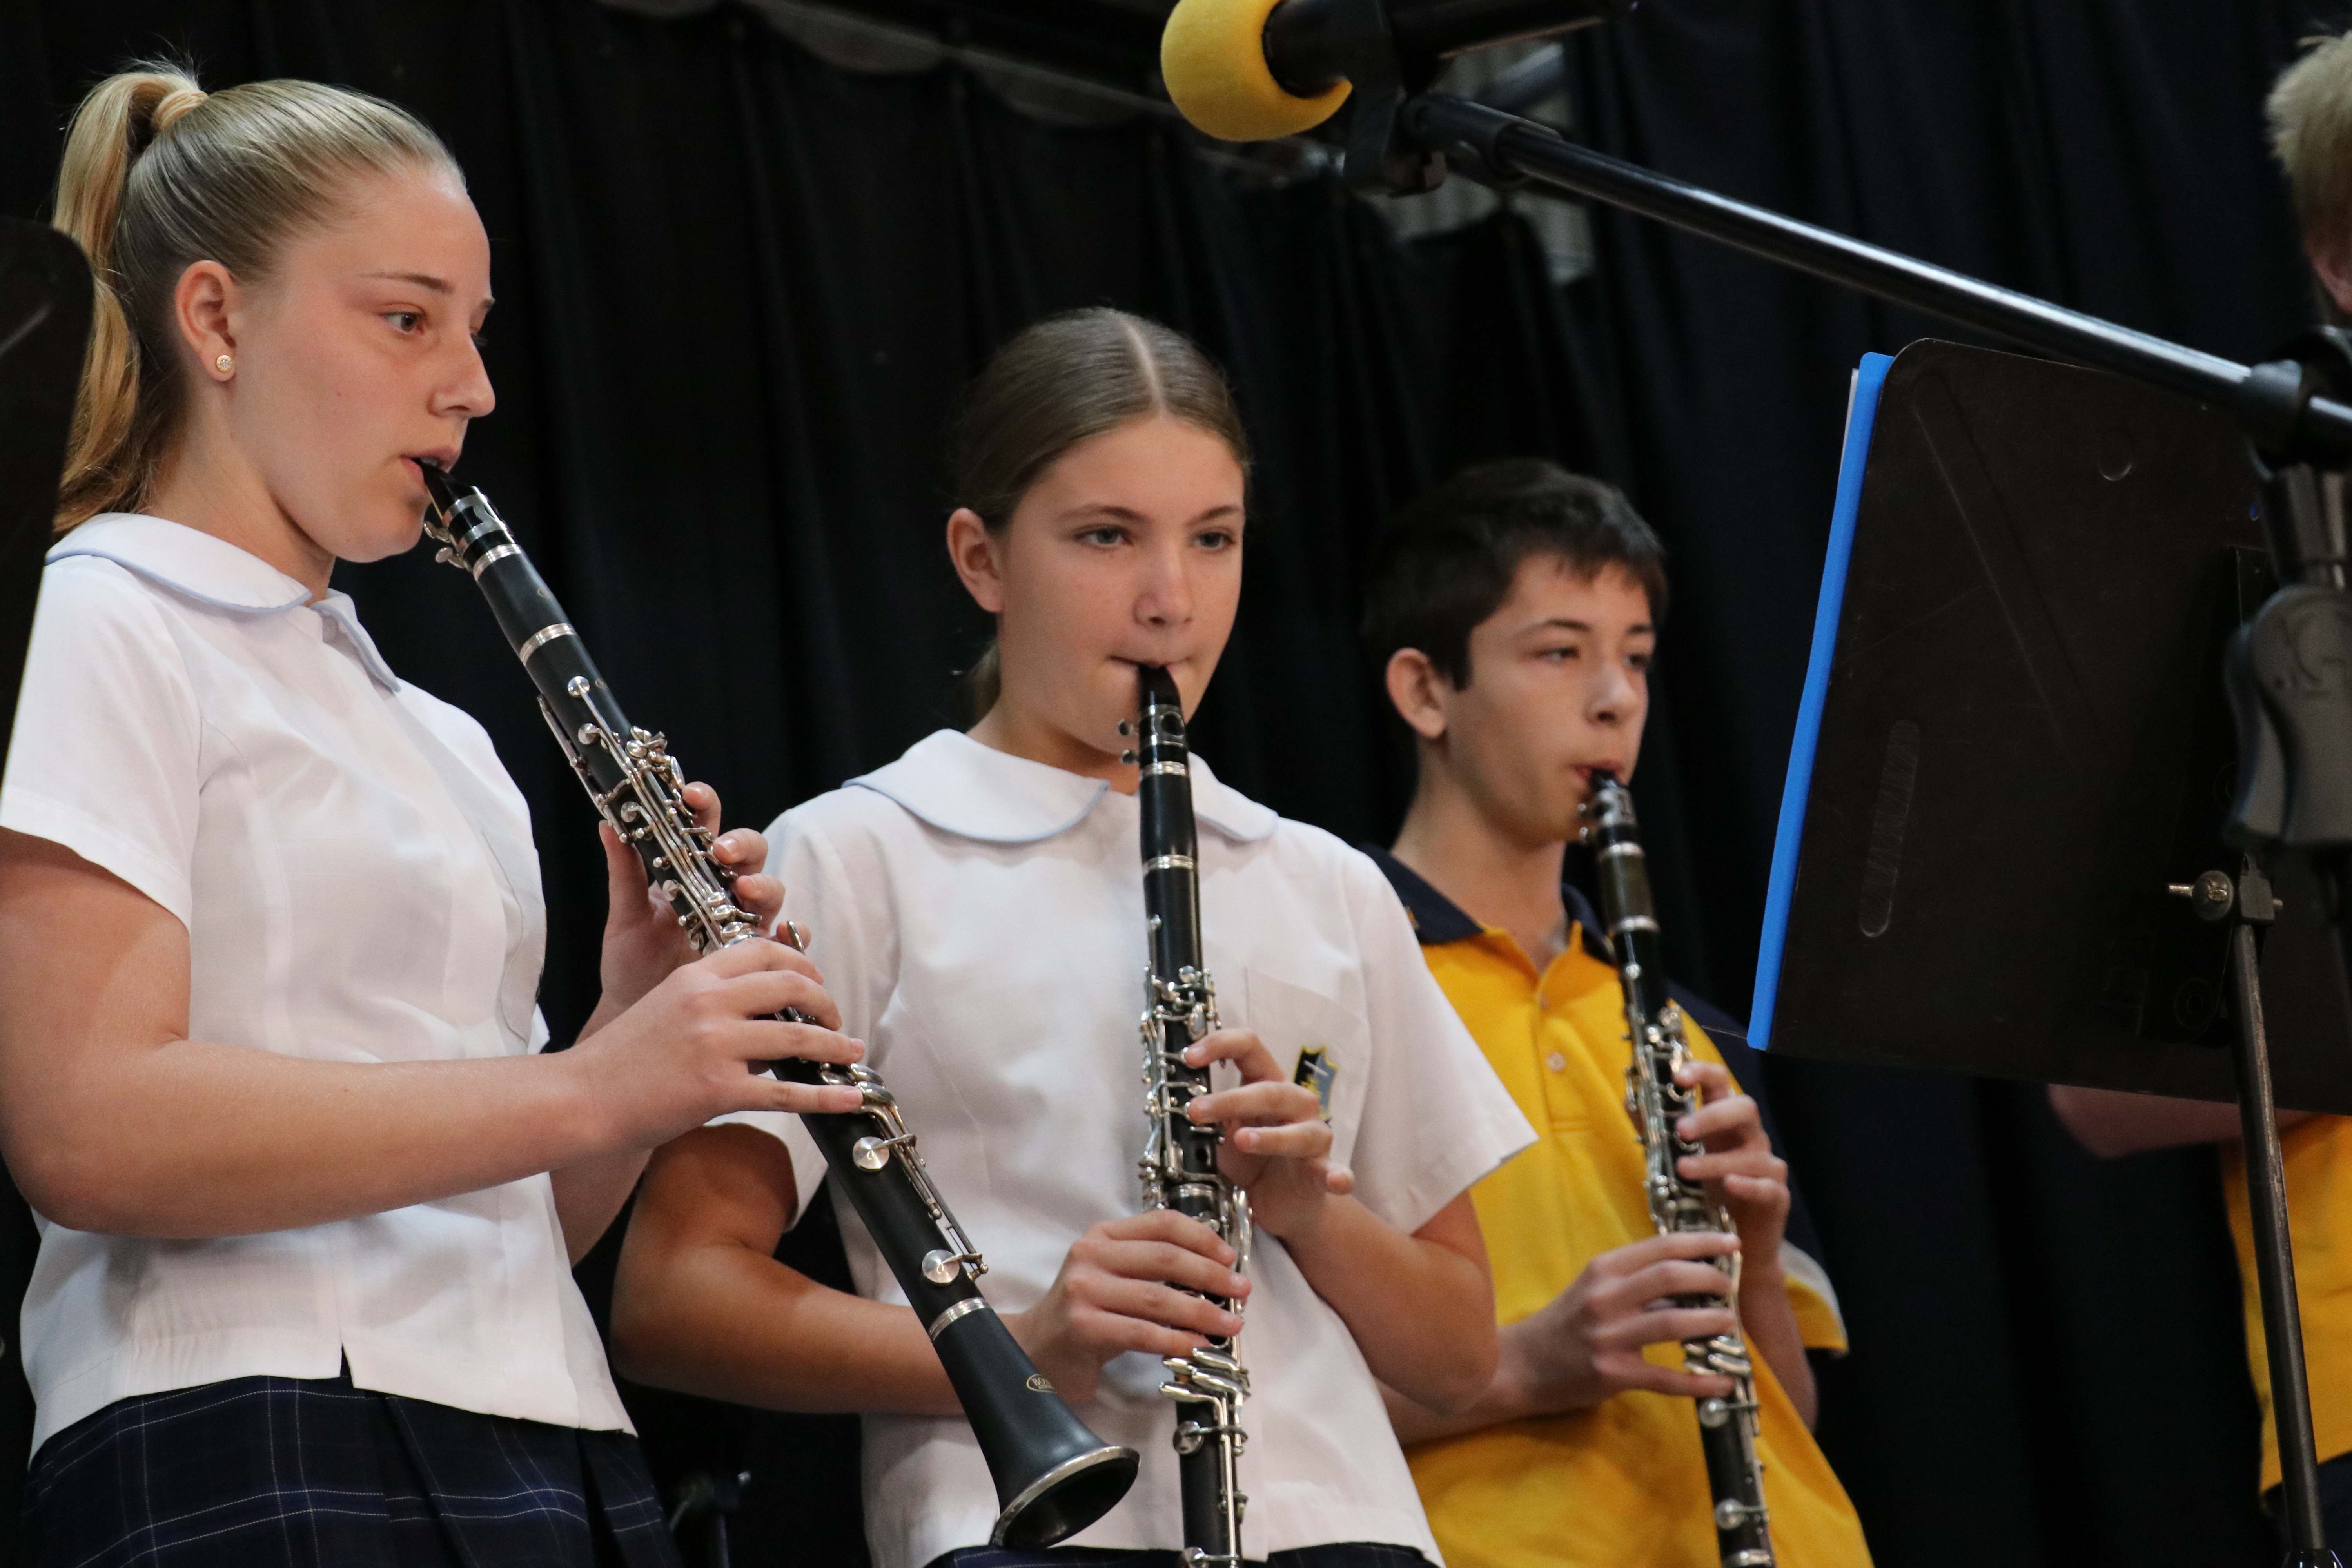 Concert band clarinet